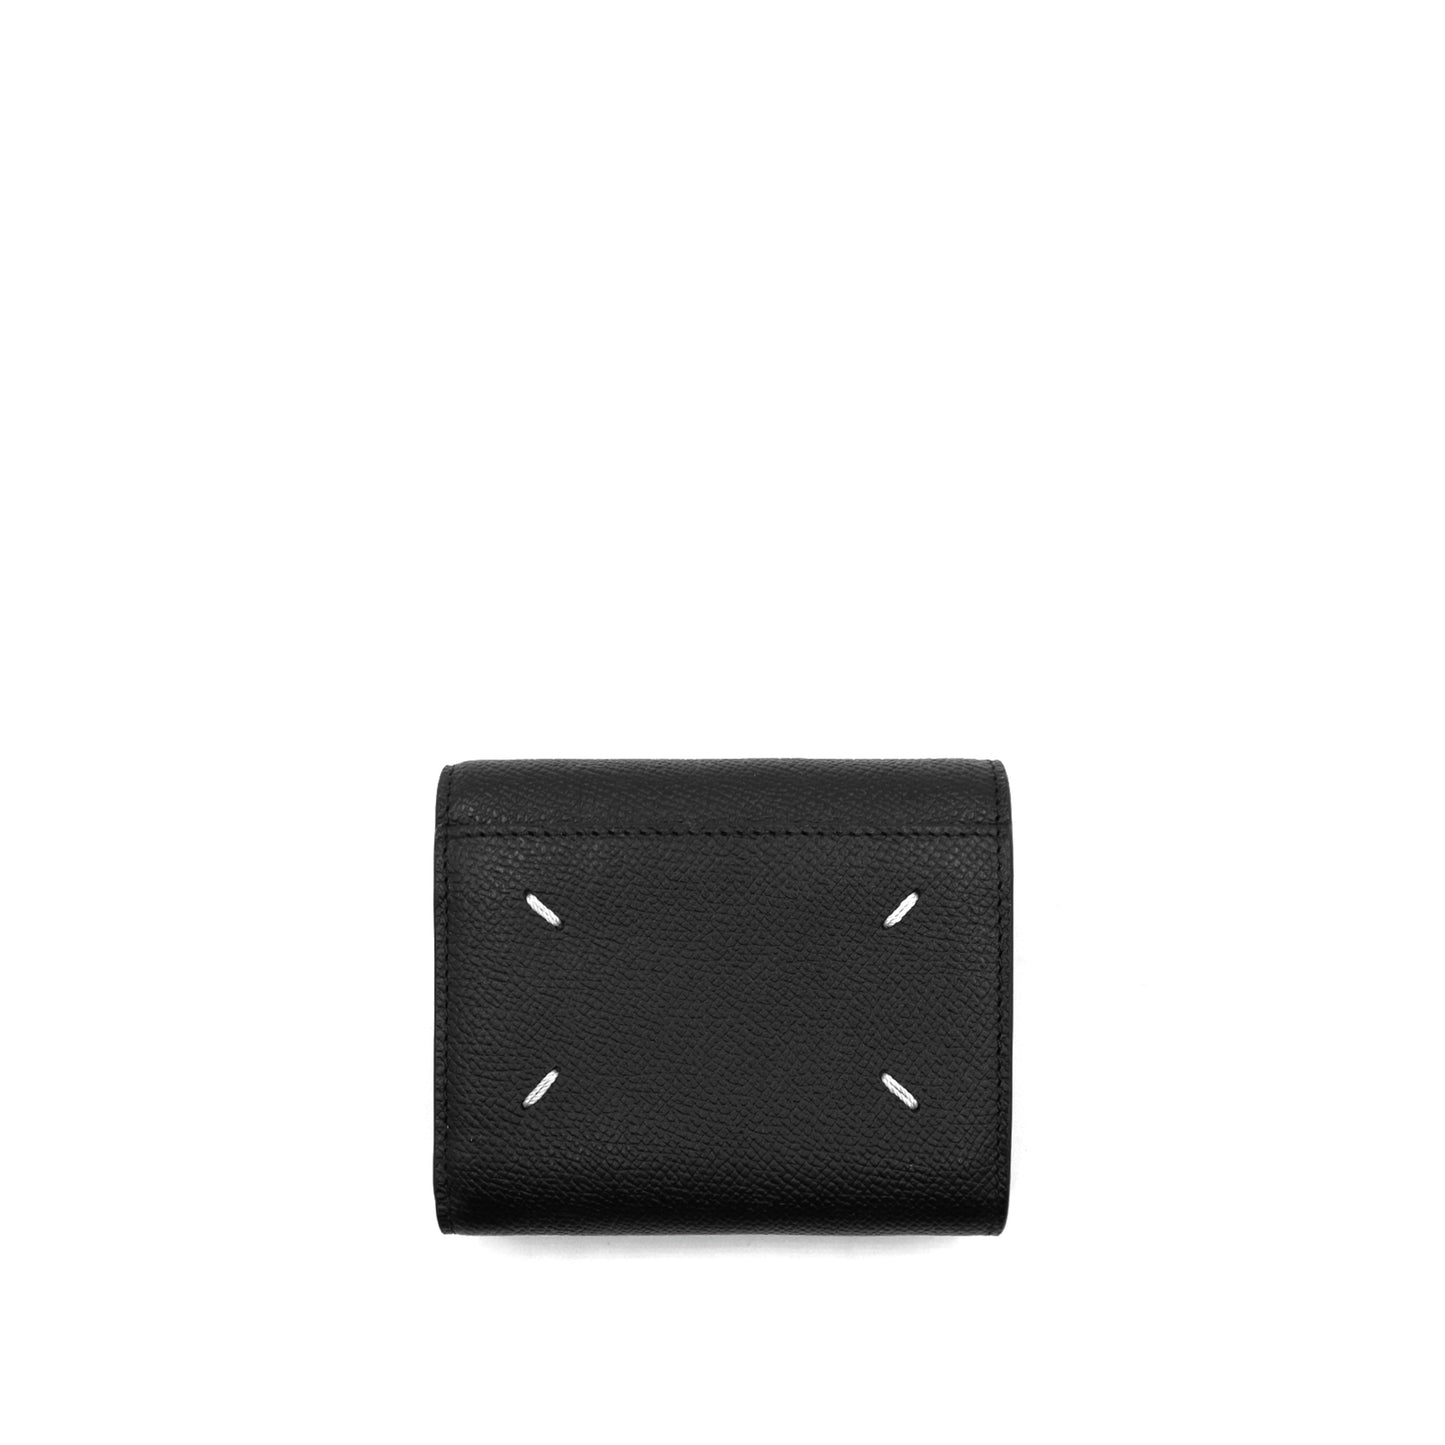 Four Stitch Tri-Fold Wallet in Black